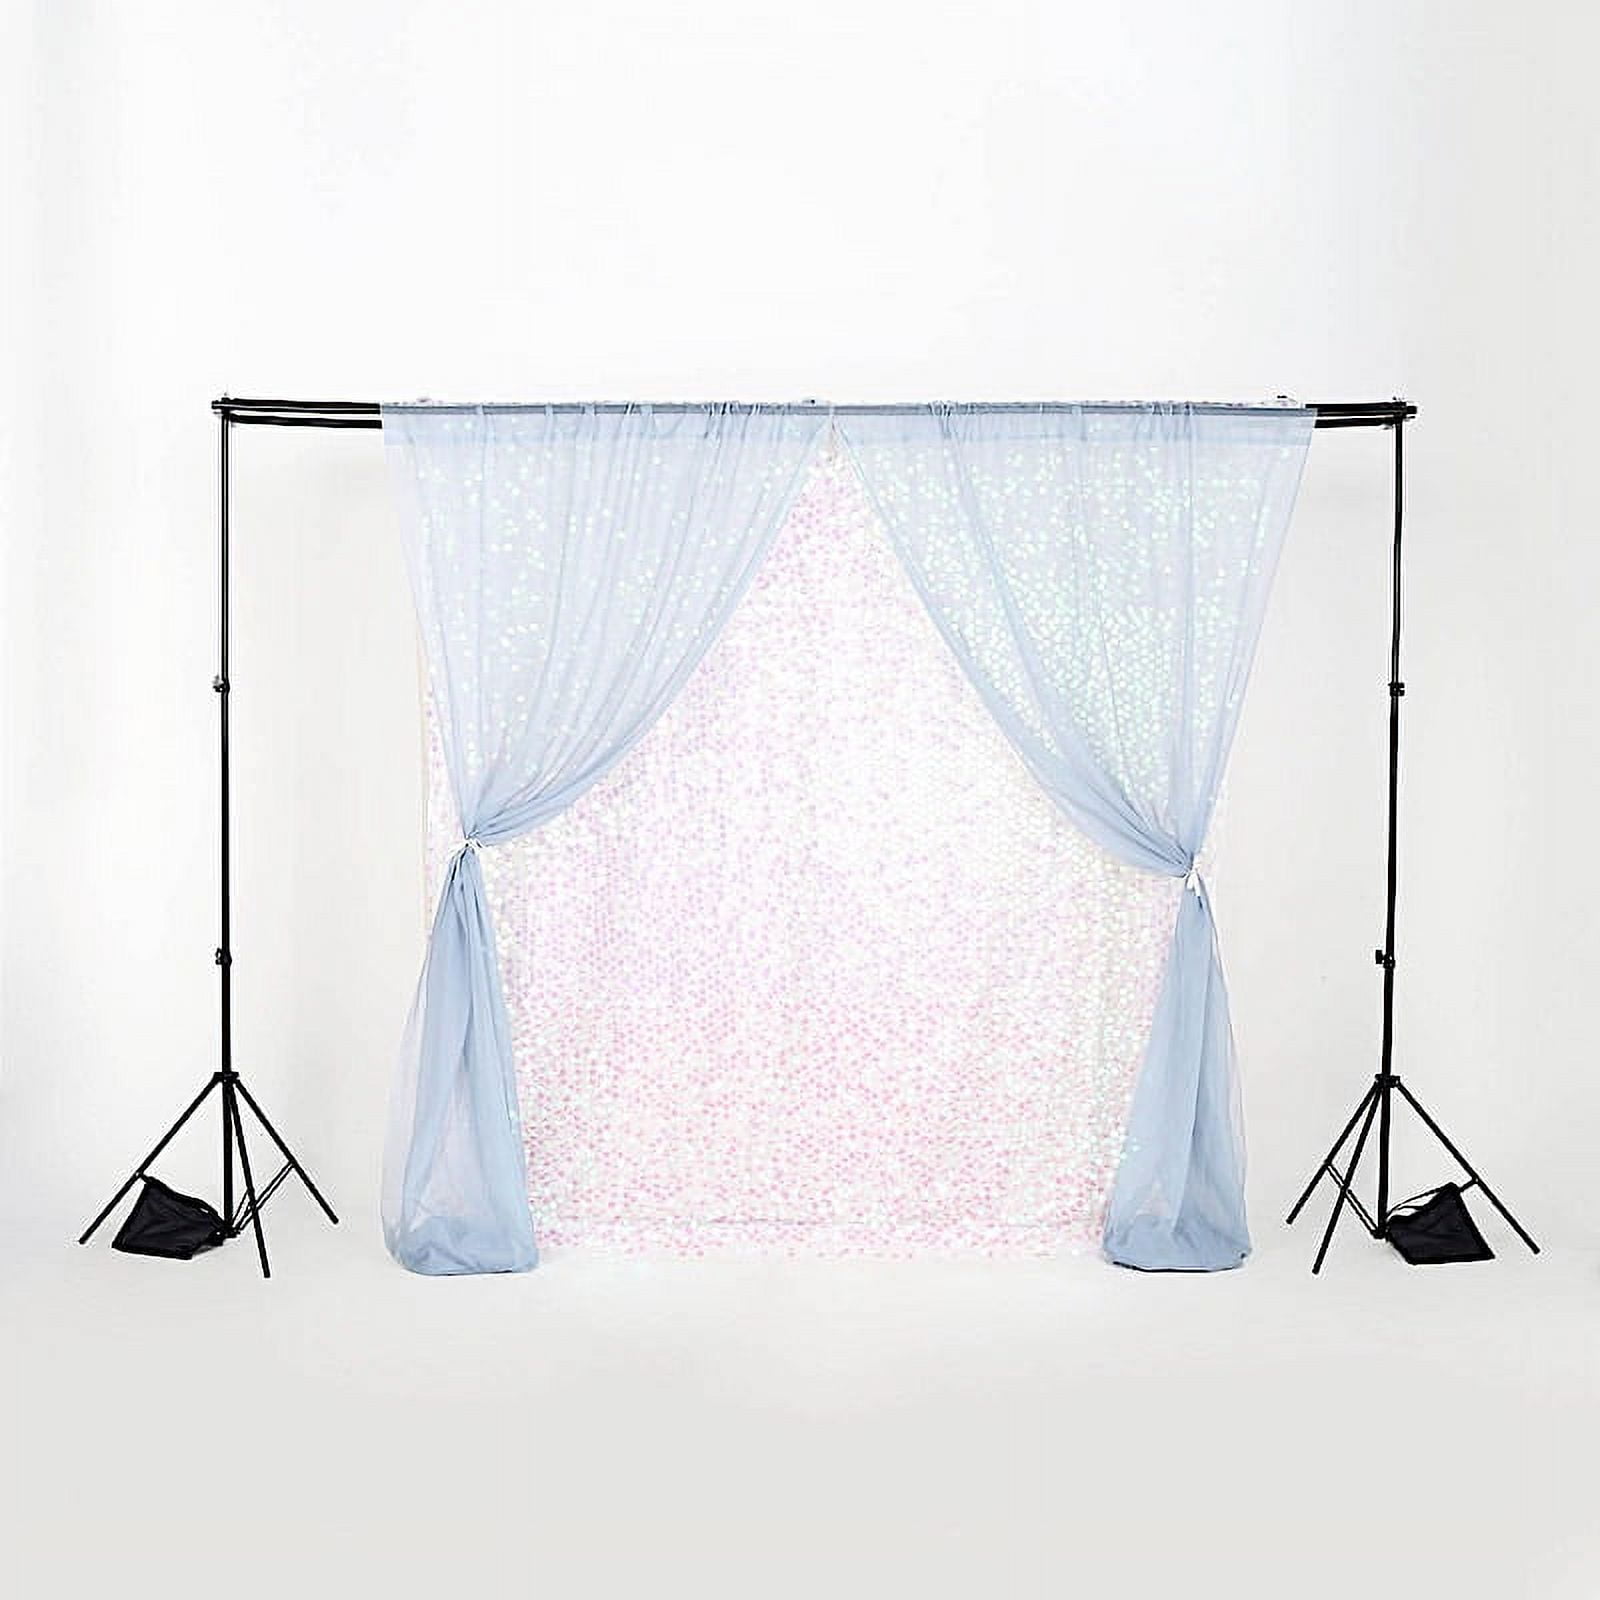 Balsacircle 10 ft x 10 ft Black Photo Backdrop Stand Kit - Studio Background